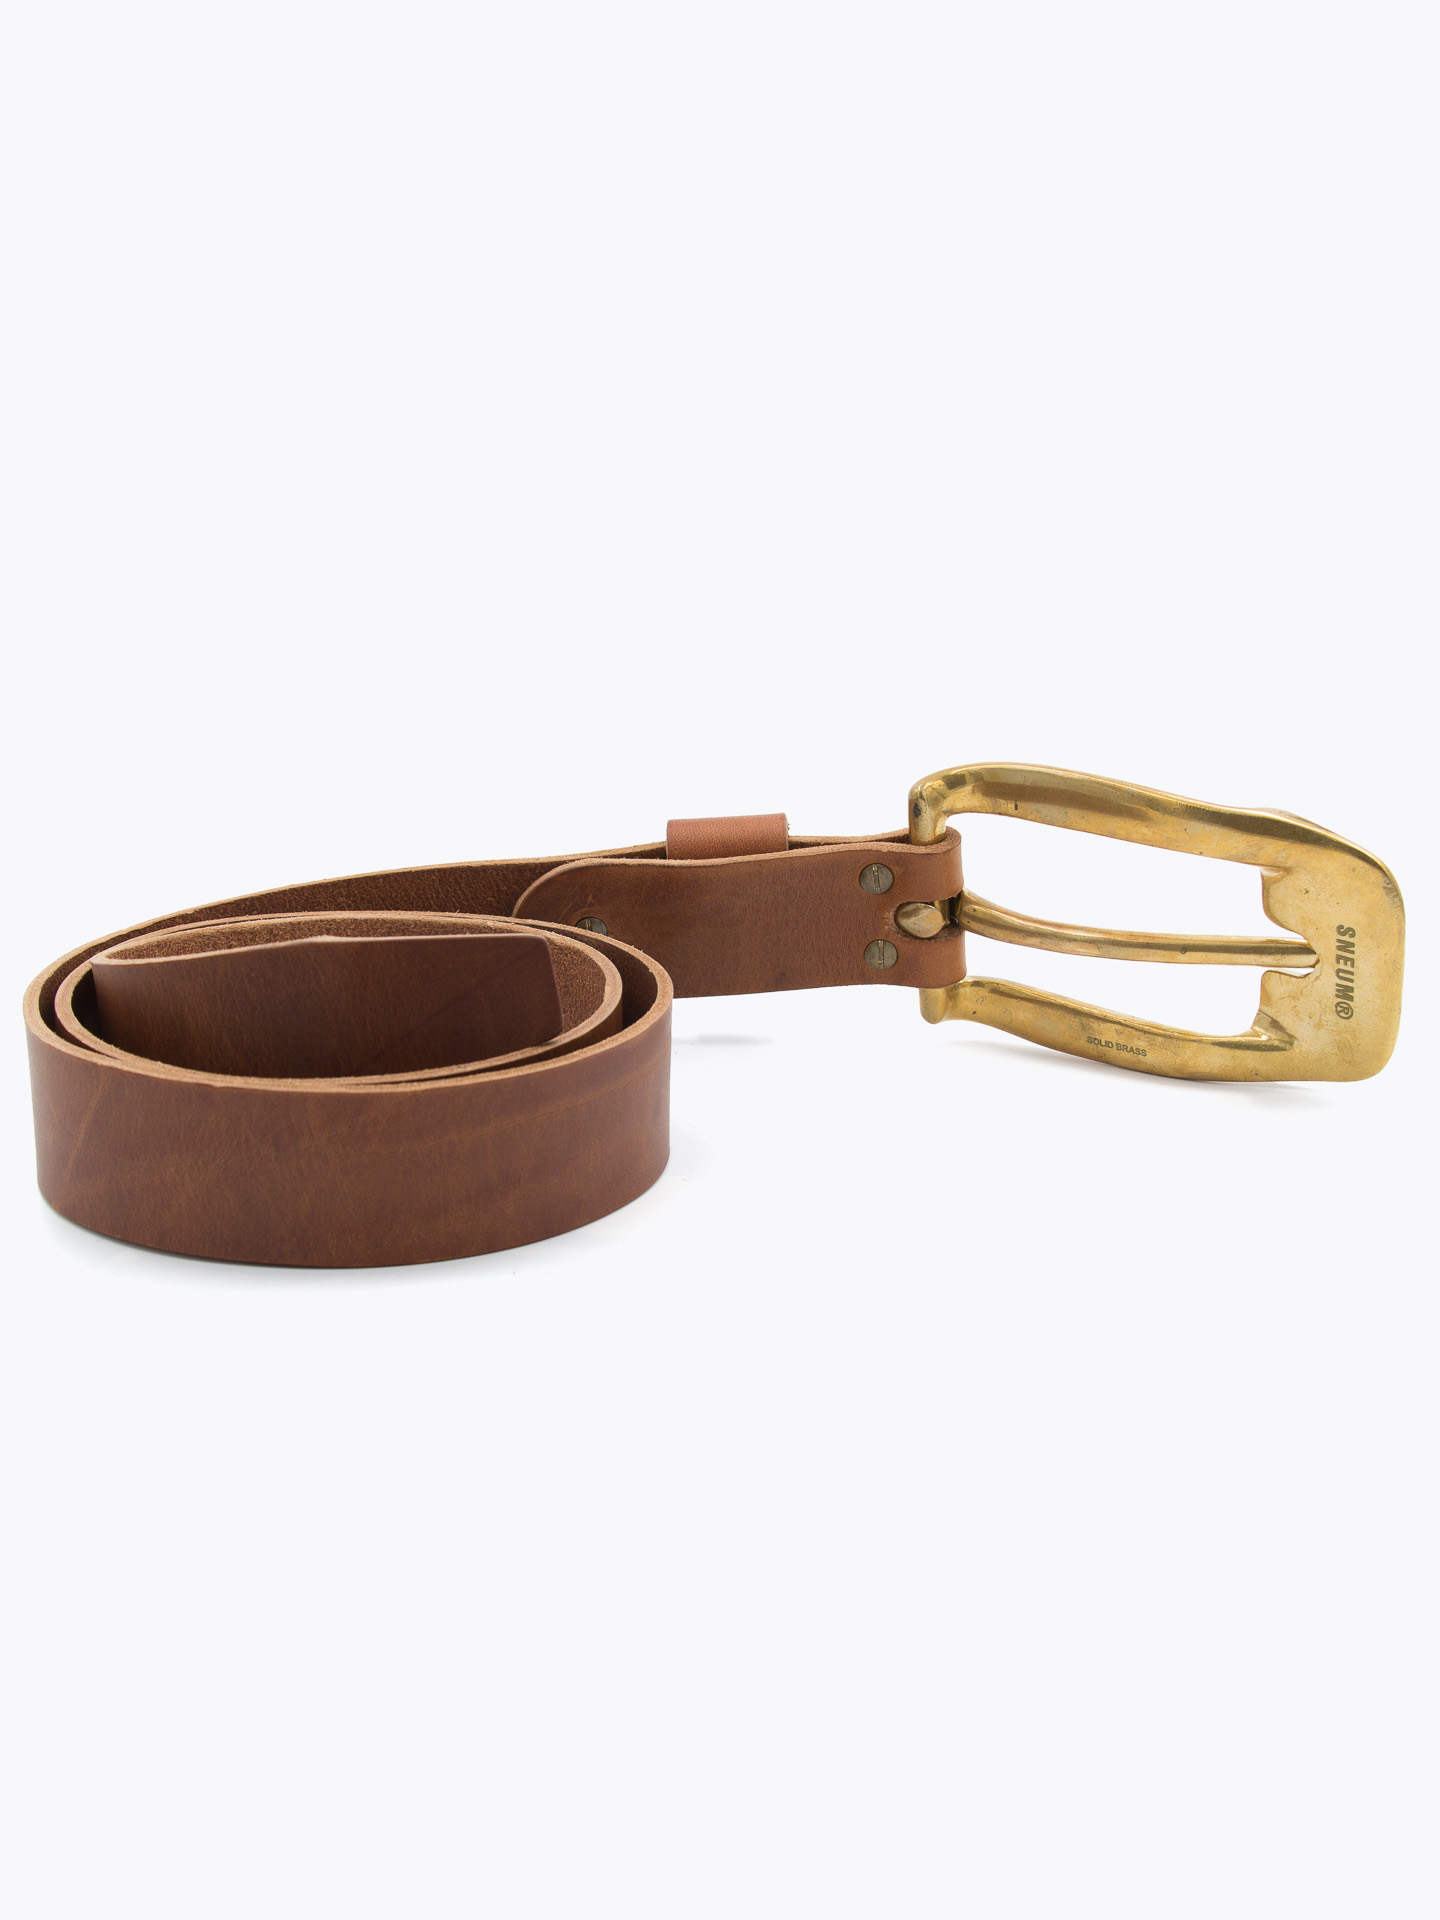 The Hopper Belt Denni Hopper belt Large brass buckle belt The american dreamer Lawrence Schiller